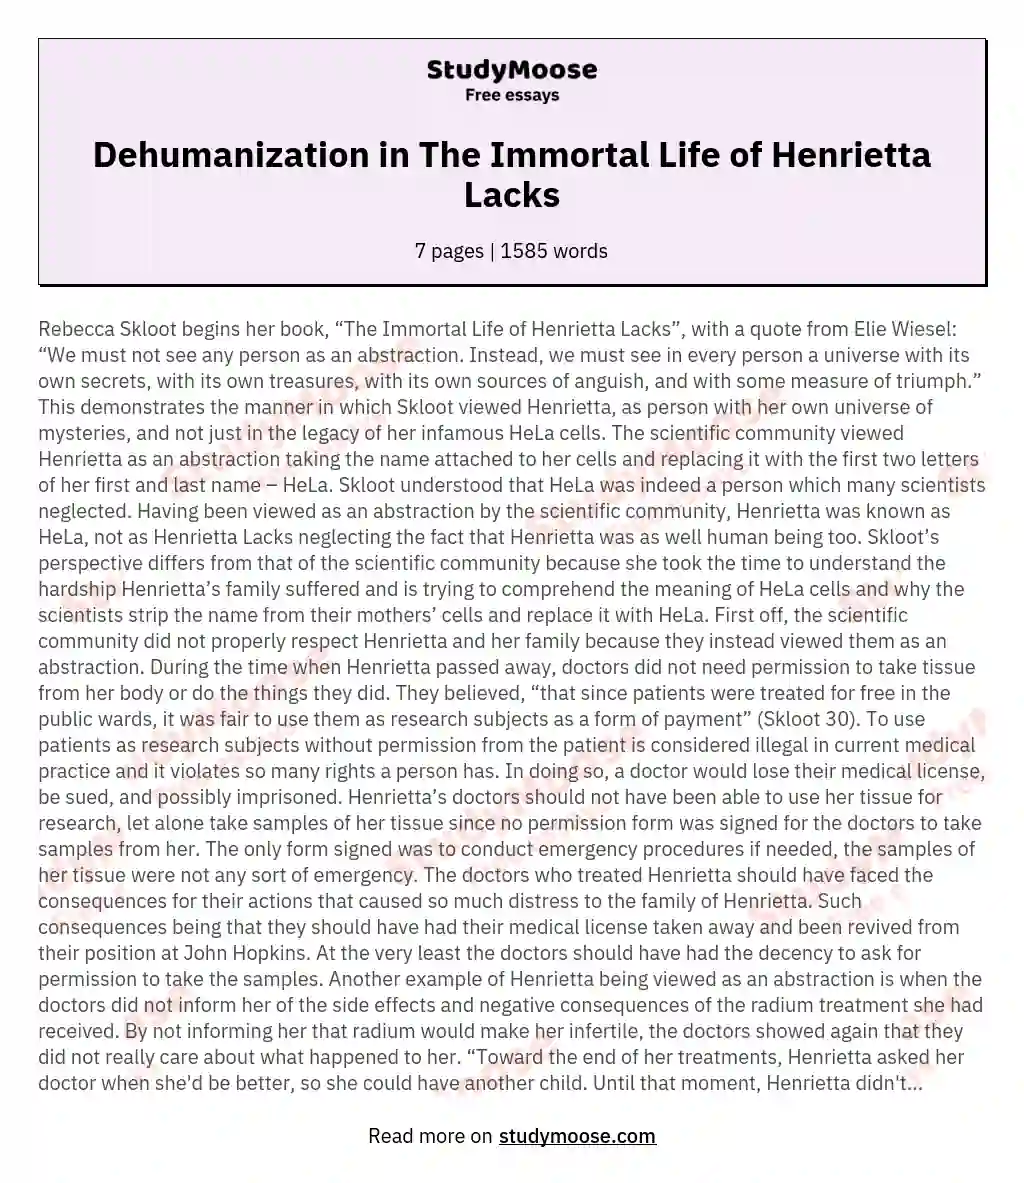 Dehumanization in The Immortal Life of Henrietta Lacks essay